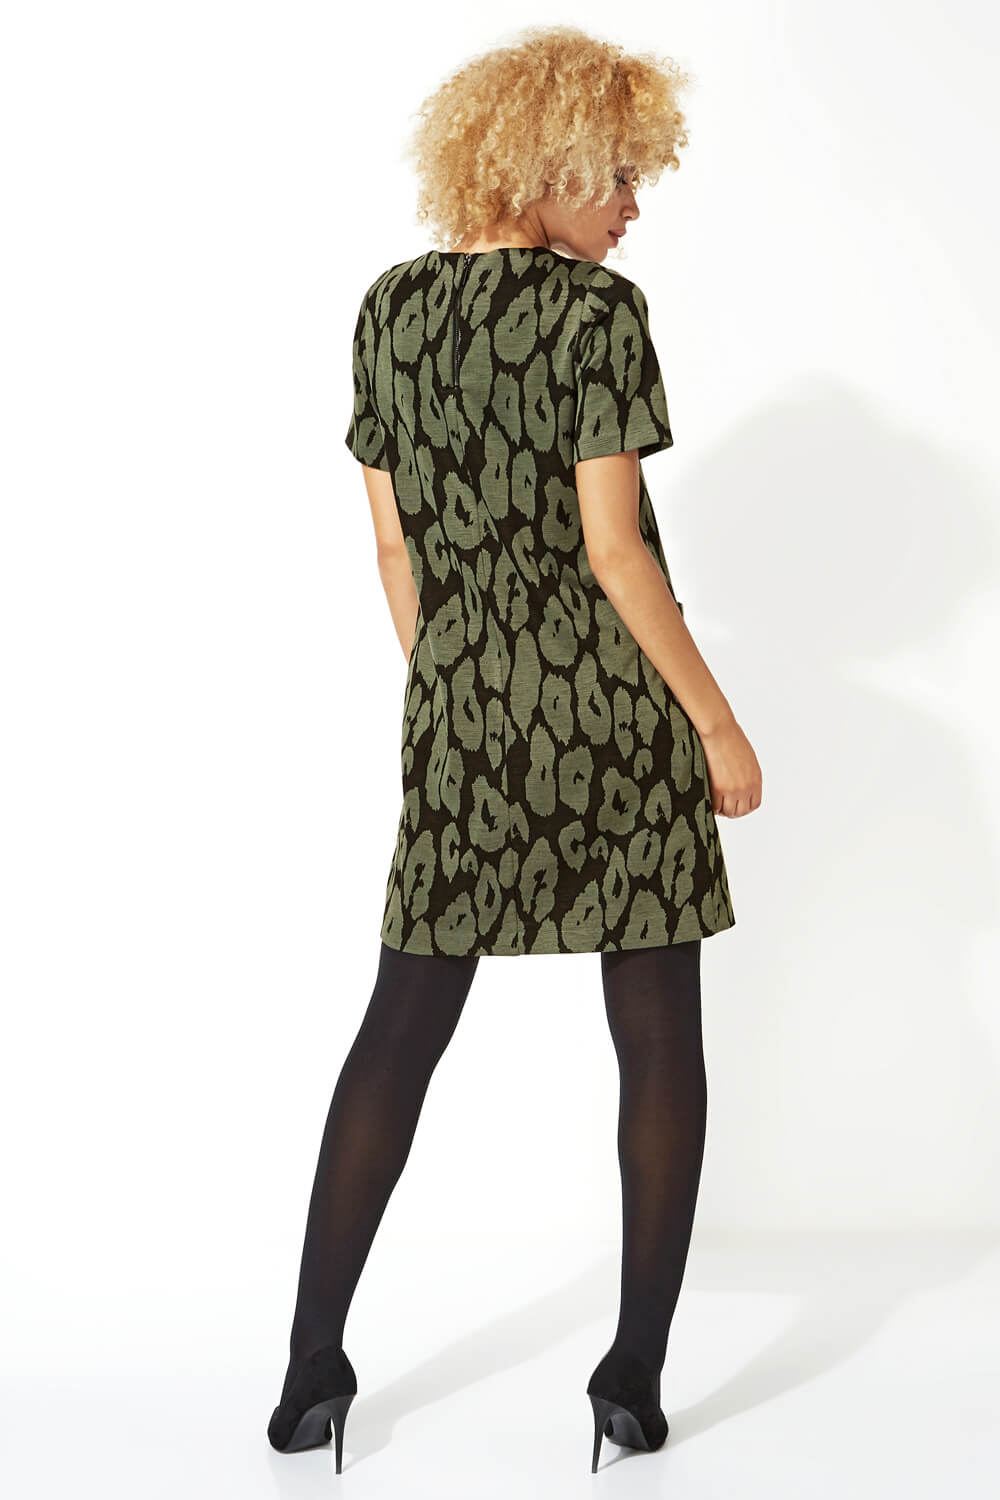 KHAKI Animal Leopard Print Shift Dress, Image 3 of 5